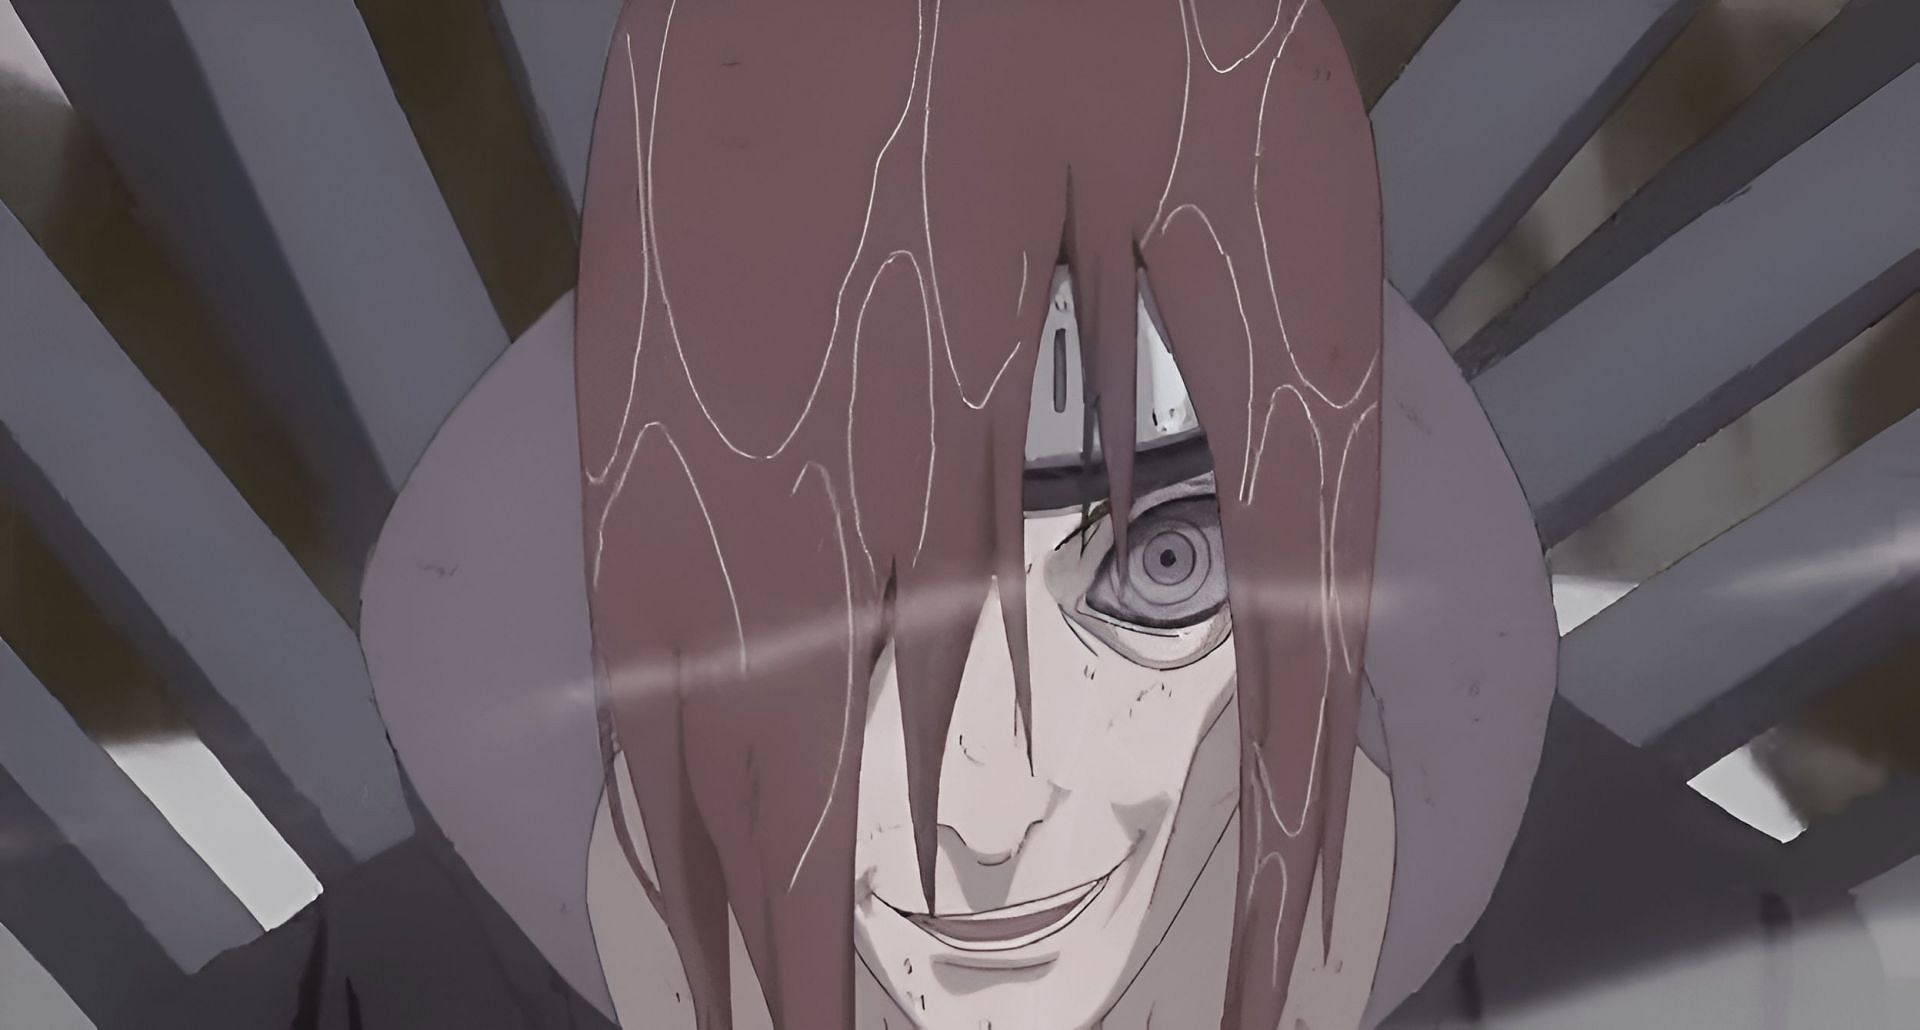 Nagato as seen in the anime (Image via Studio Pierrot)